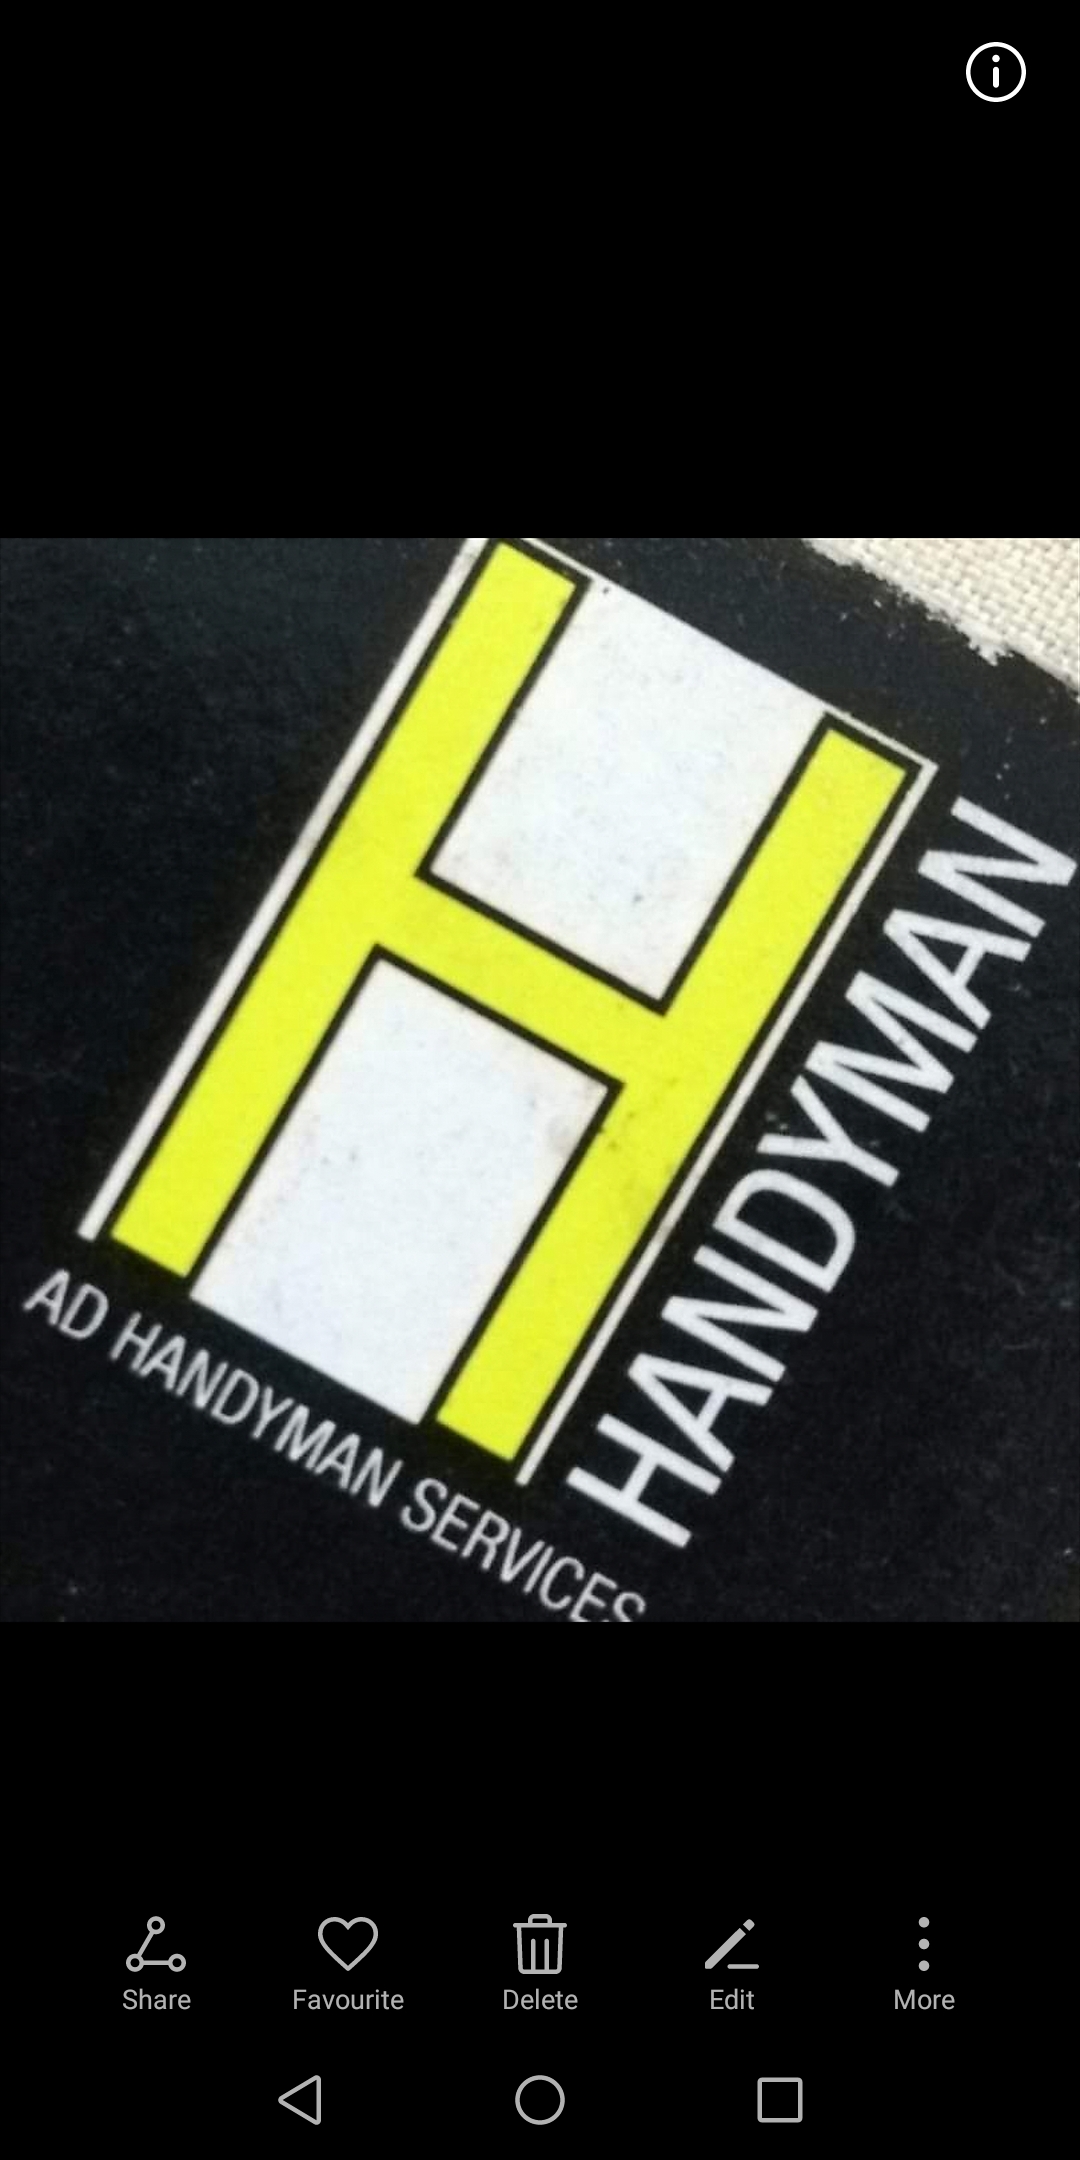 Ad Handyman Service